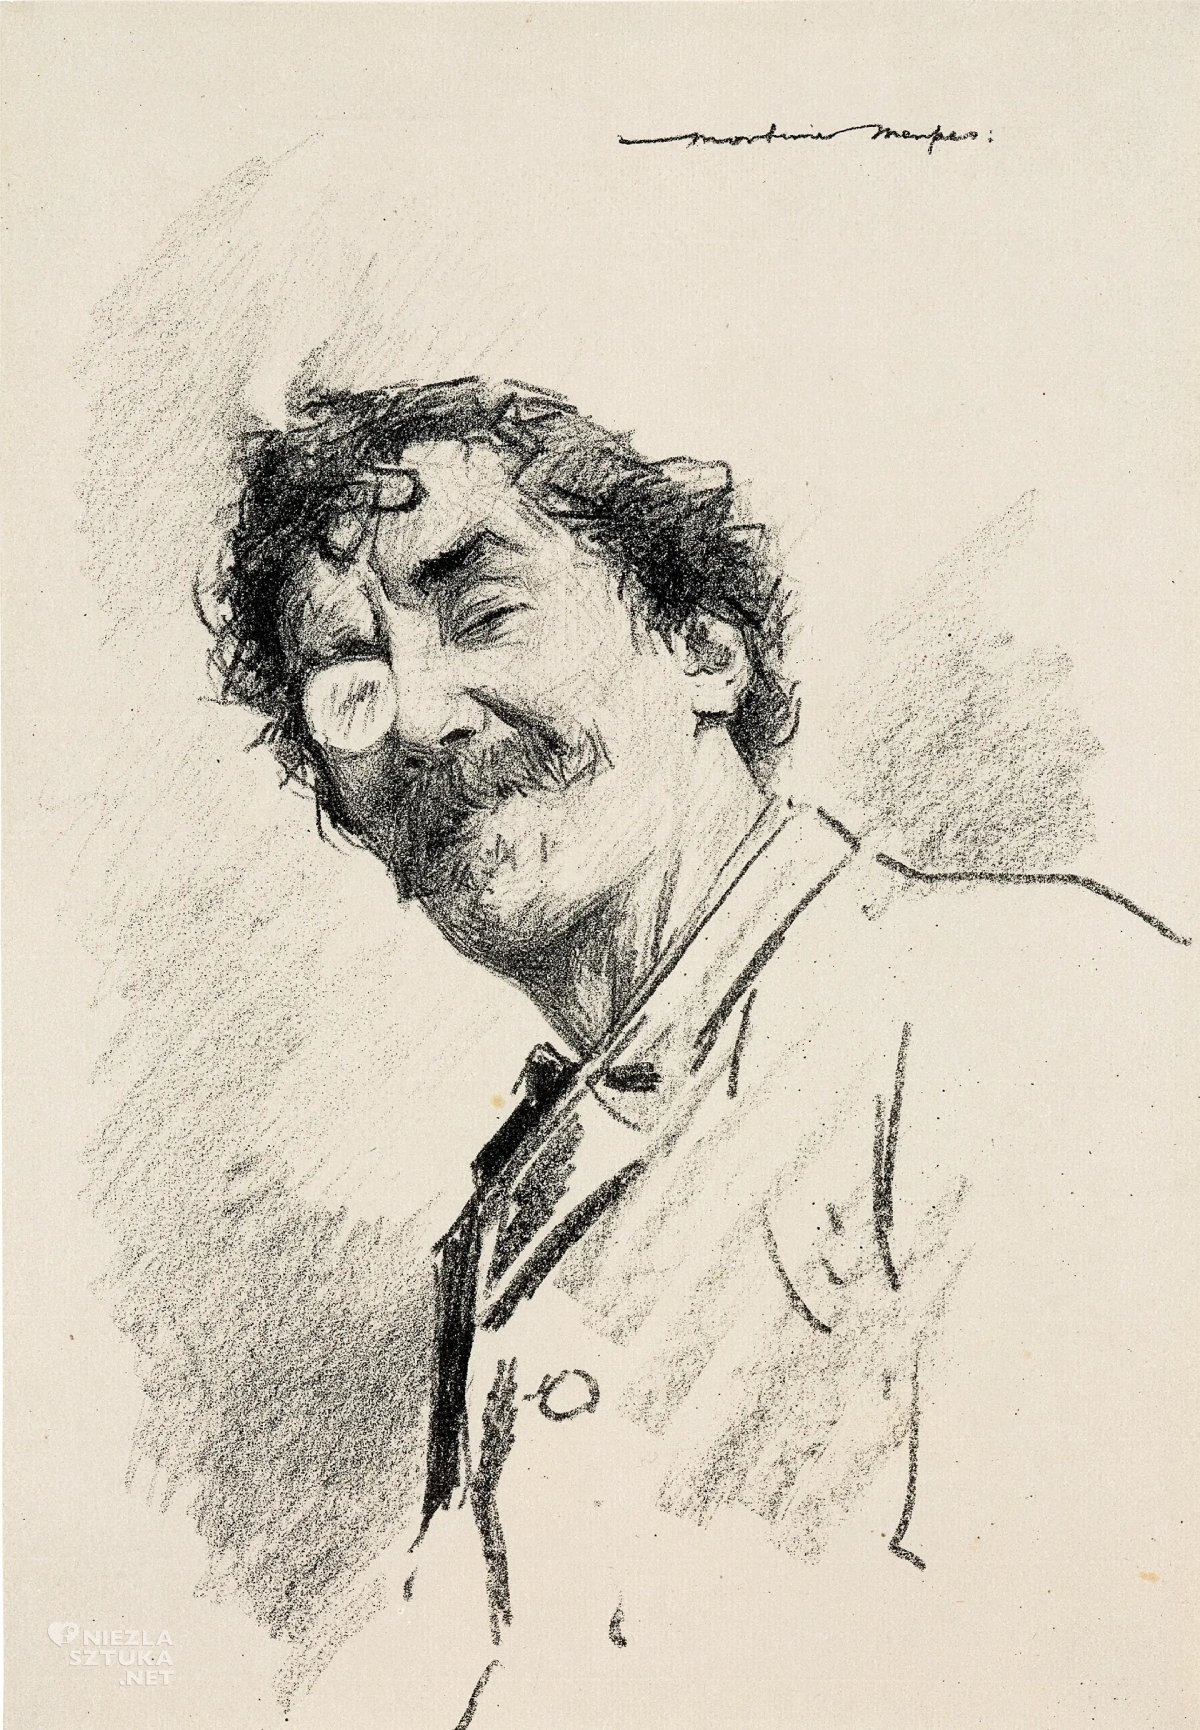 Mortrimer Menpes, Portret Jamesa McNeilla Wshistlera, James McNeill Whistler, Niezła Sztuka